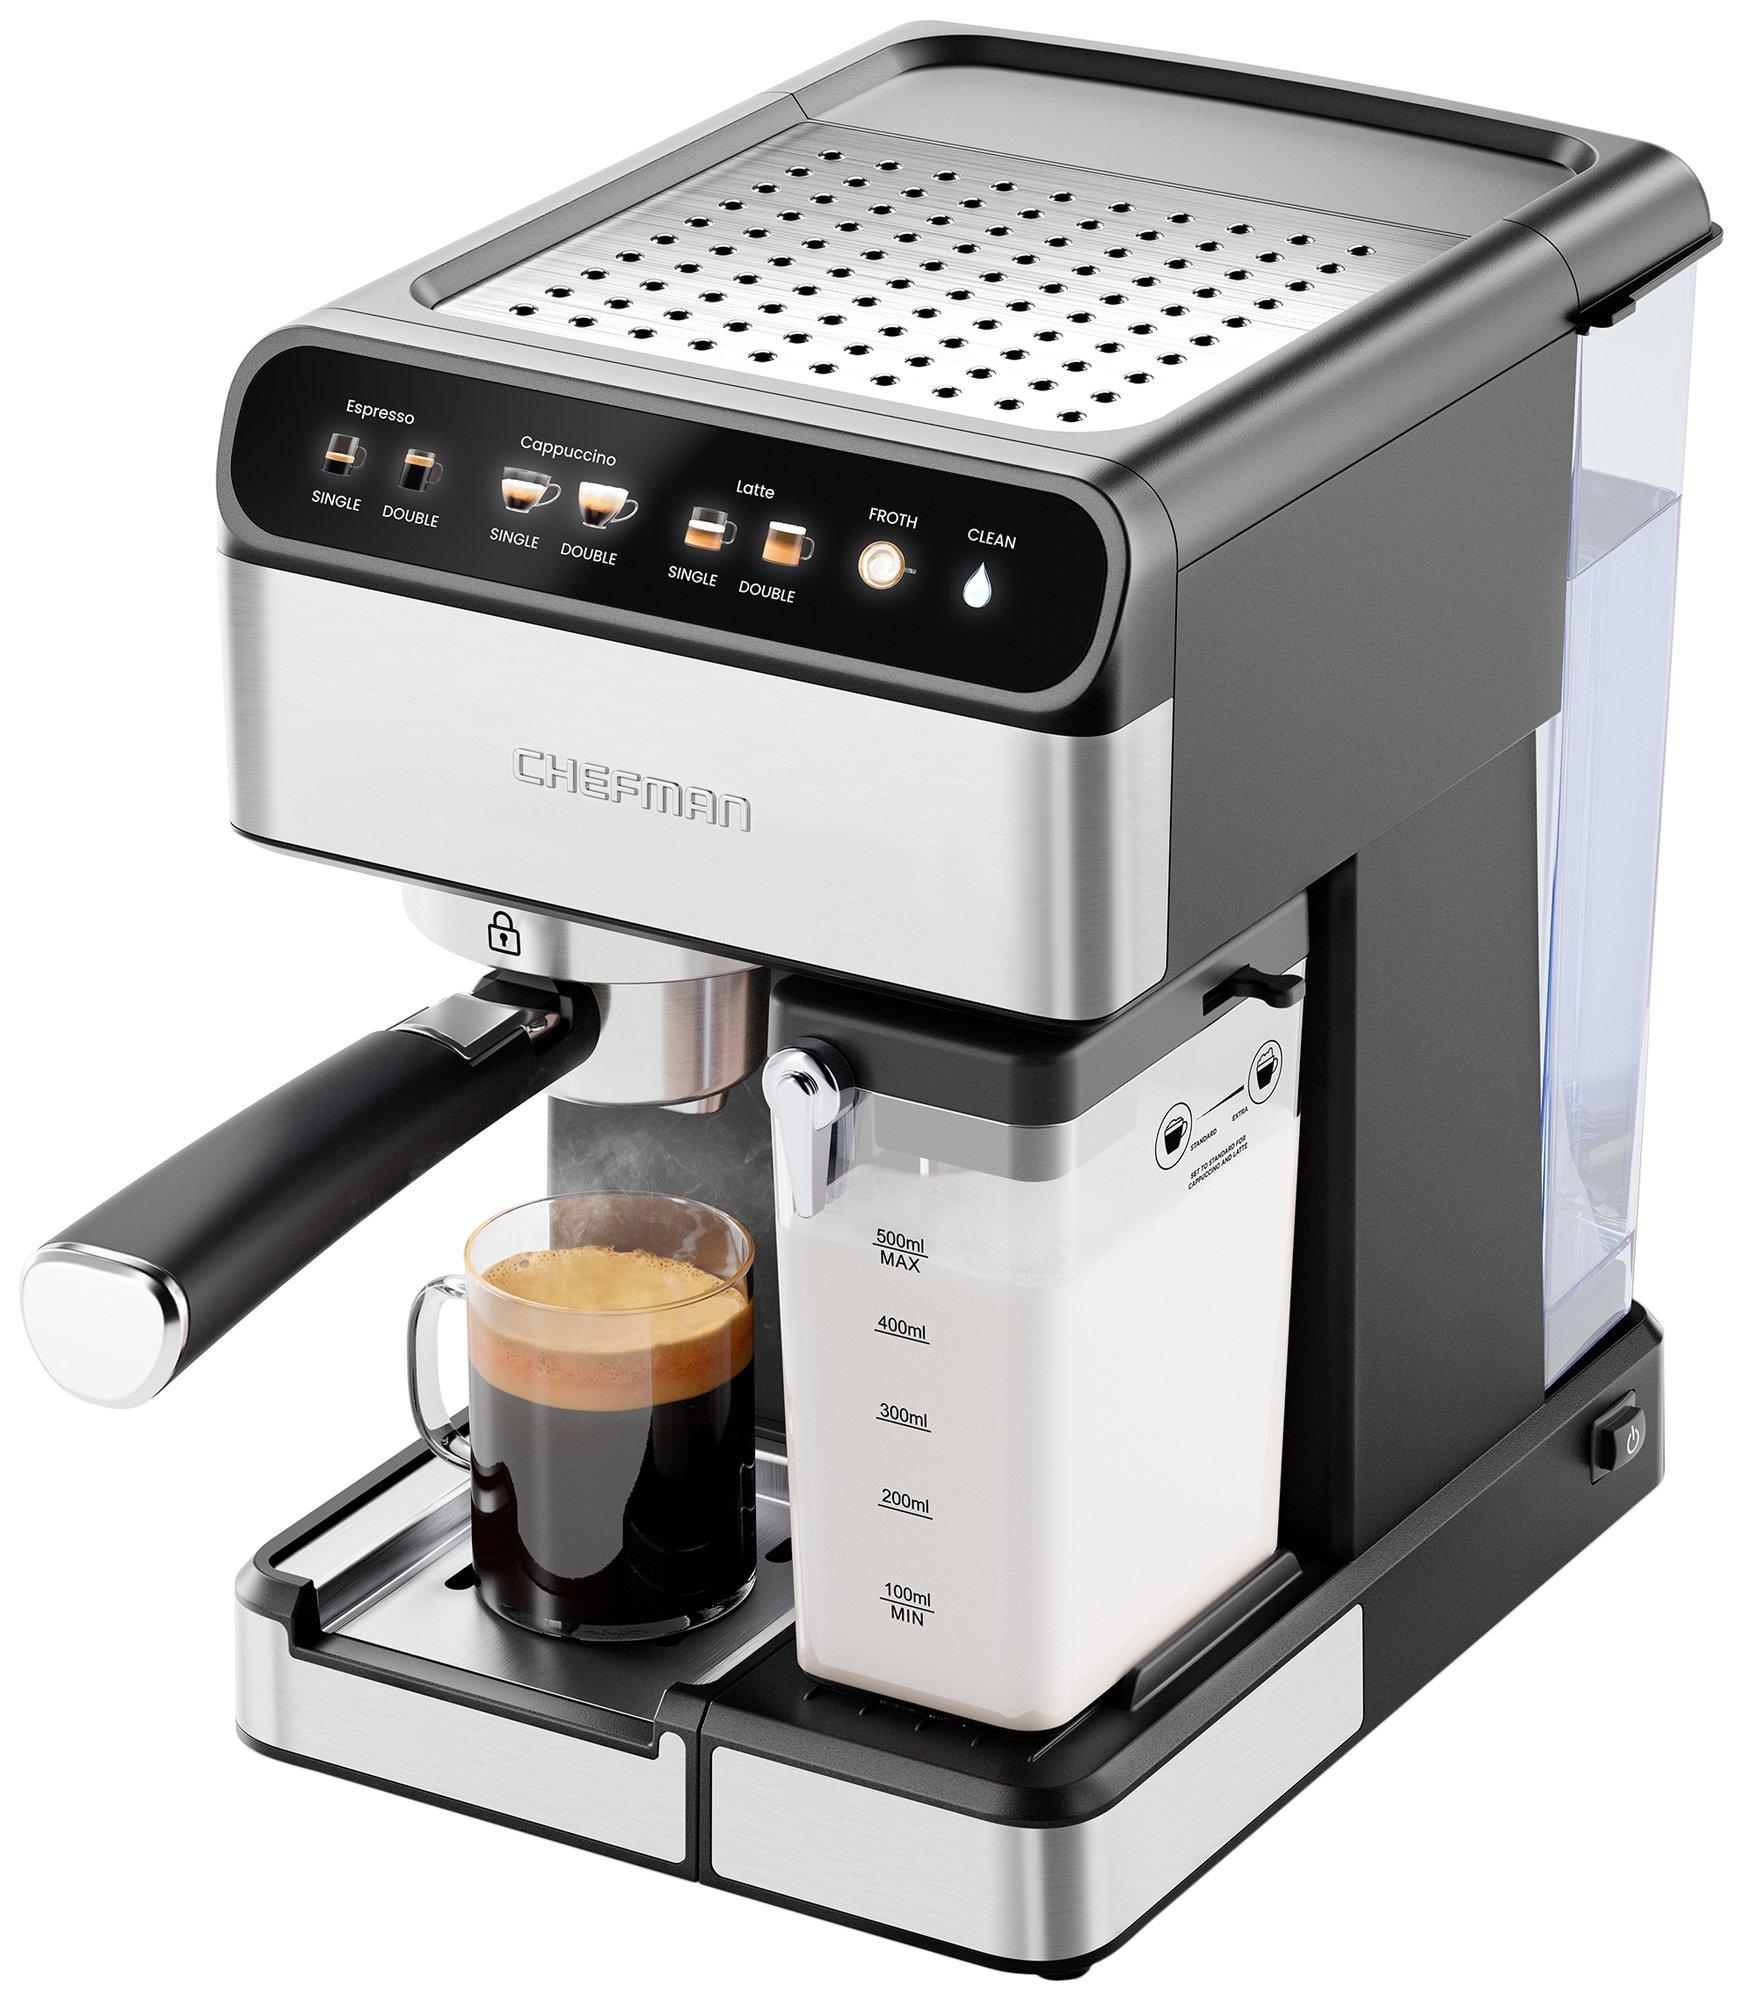 Toastmaster Dual Brew Single Serve Coffee Maker